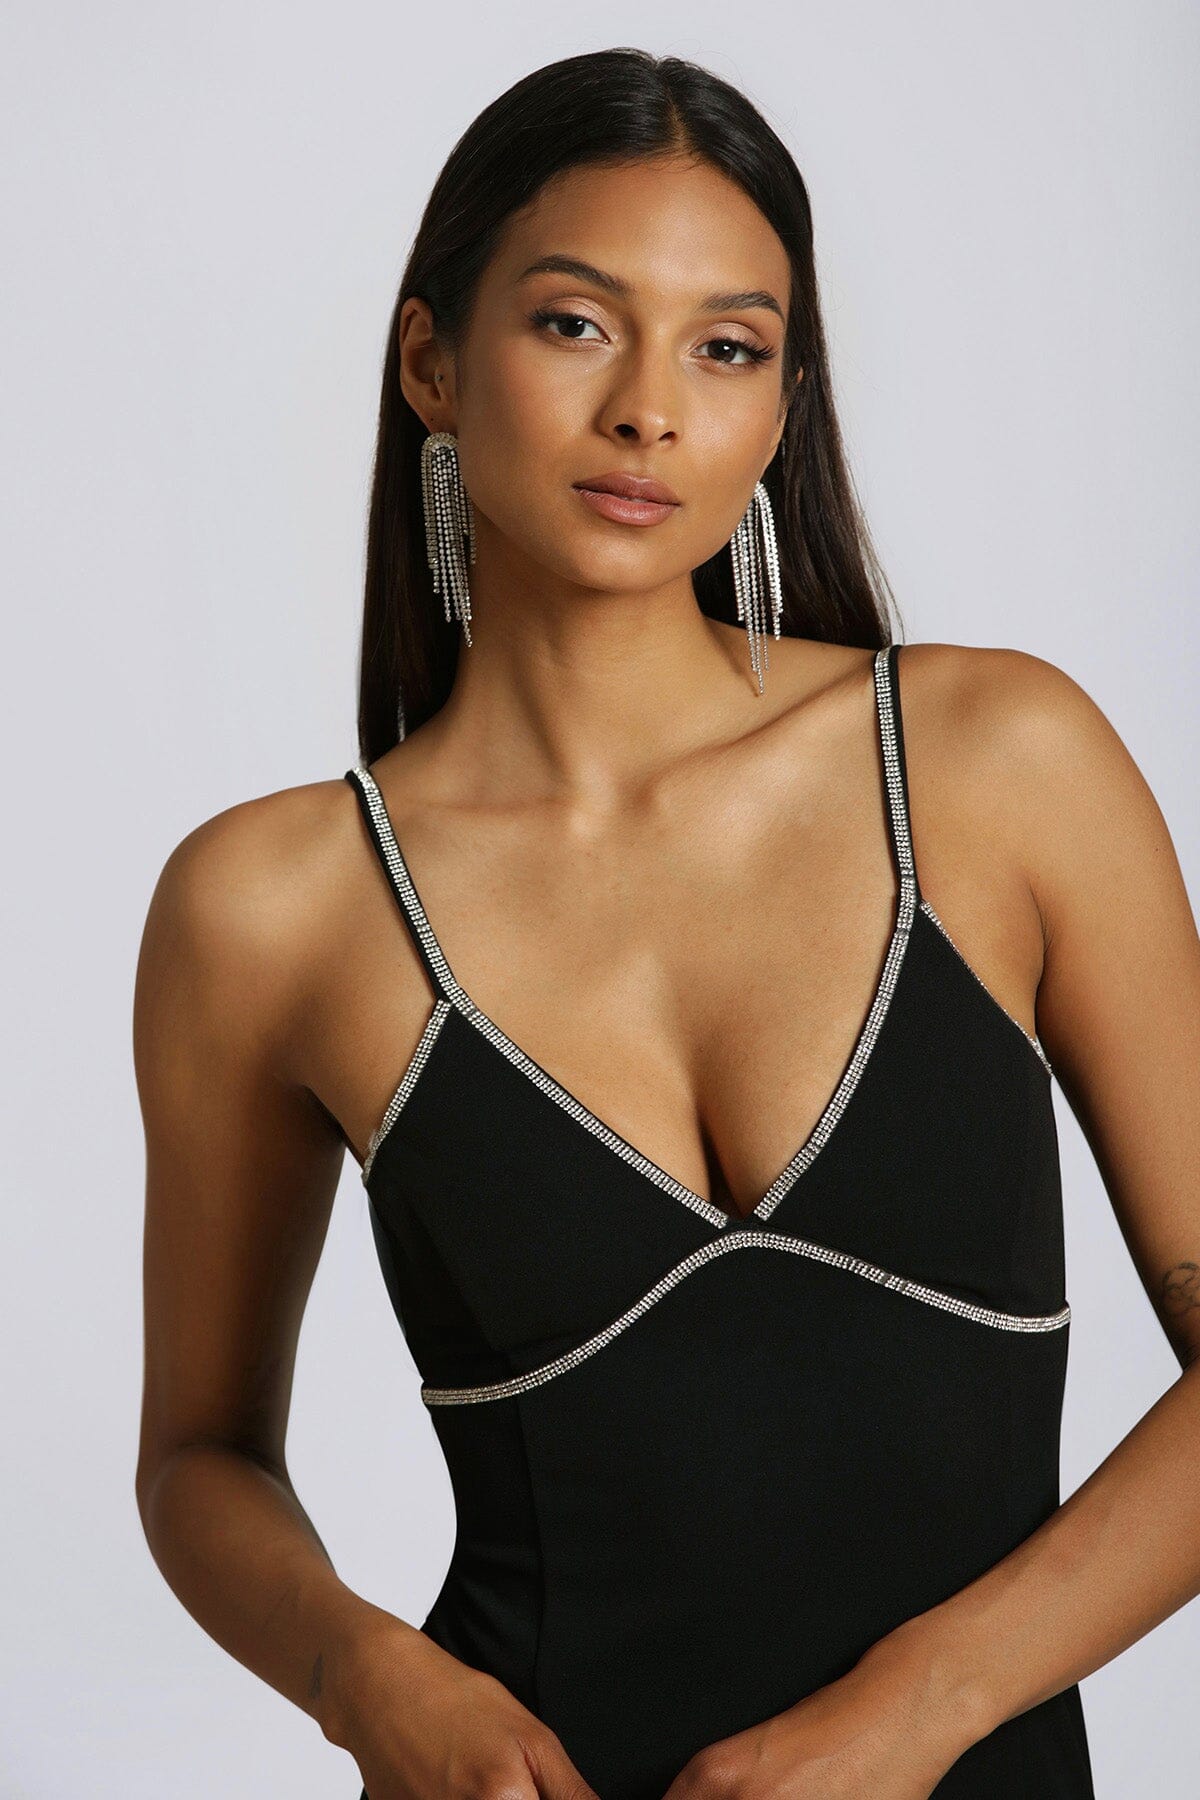 Black v-neck rhinestone trim lbd mini dress - women's figure flattering cocktail party dresses for holiday fashion trends